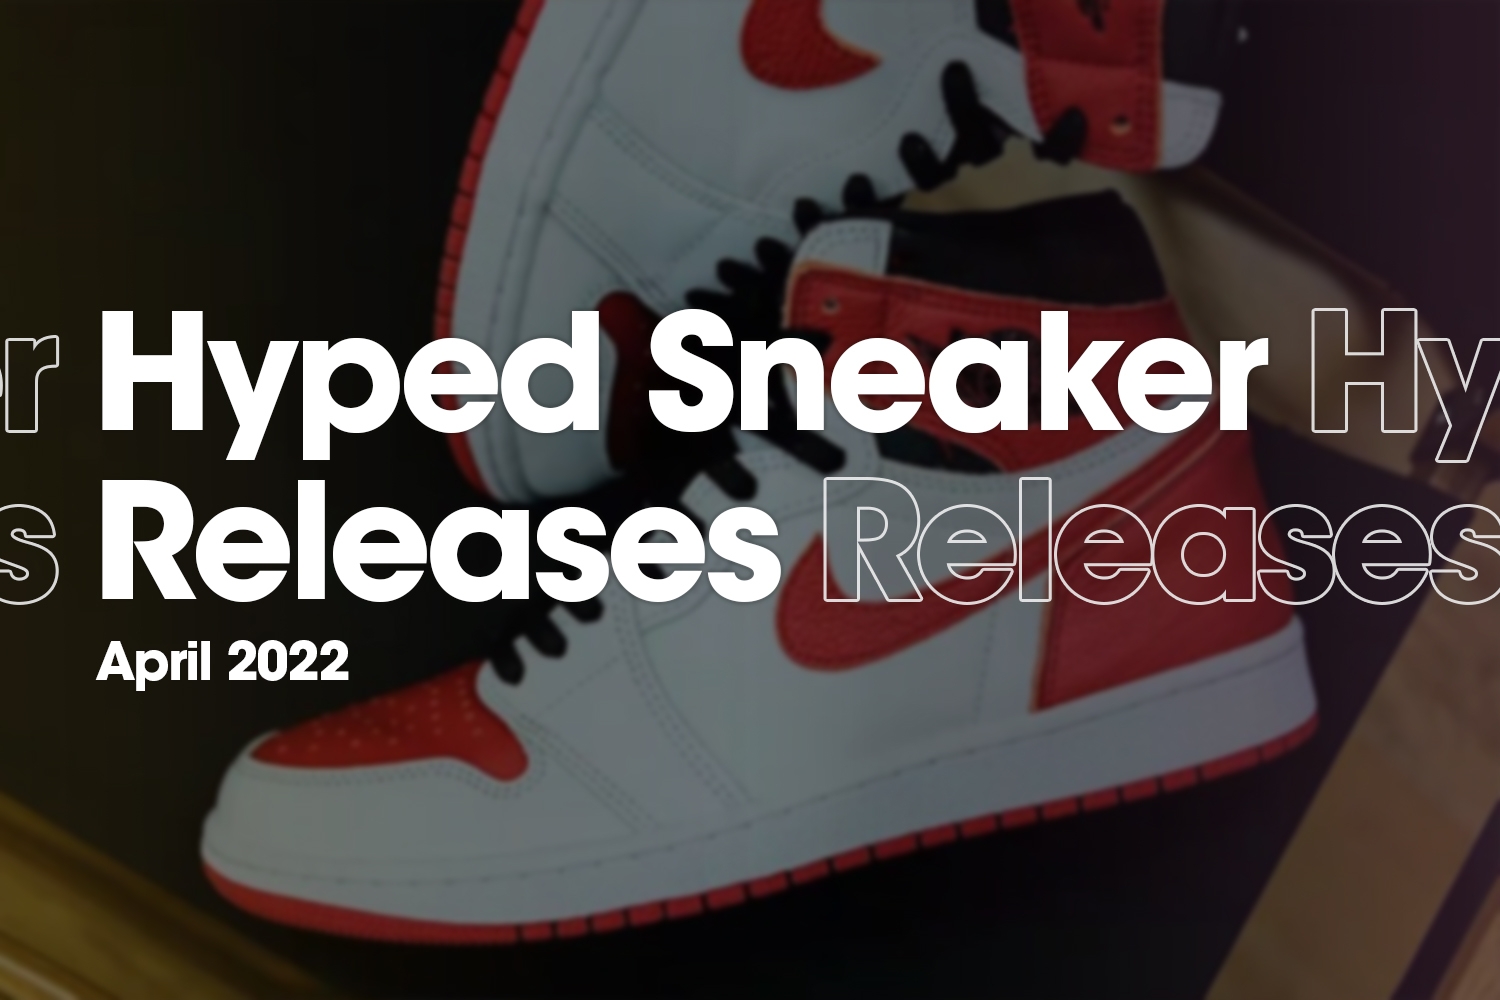 Hyped Sneaker Releases van april 2022